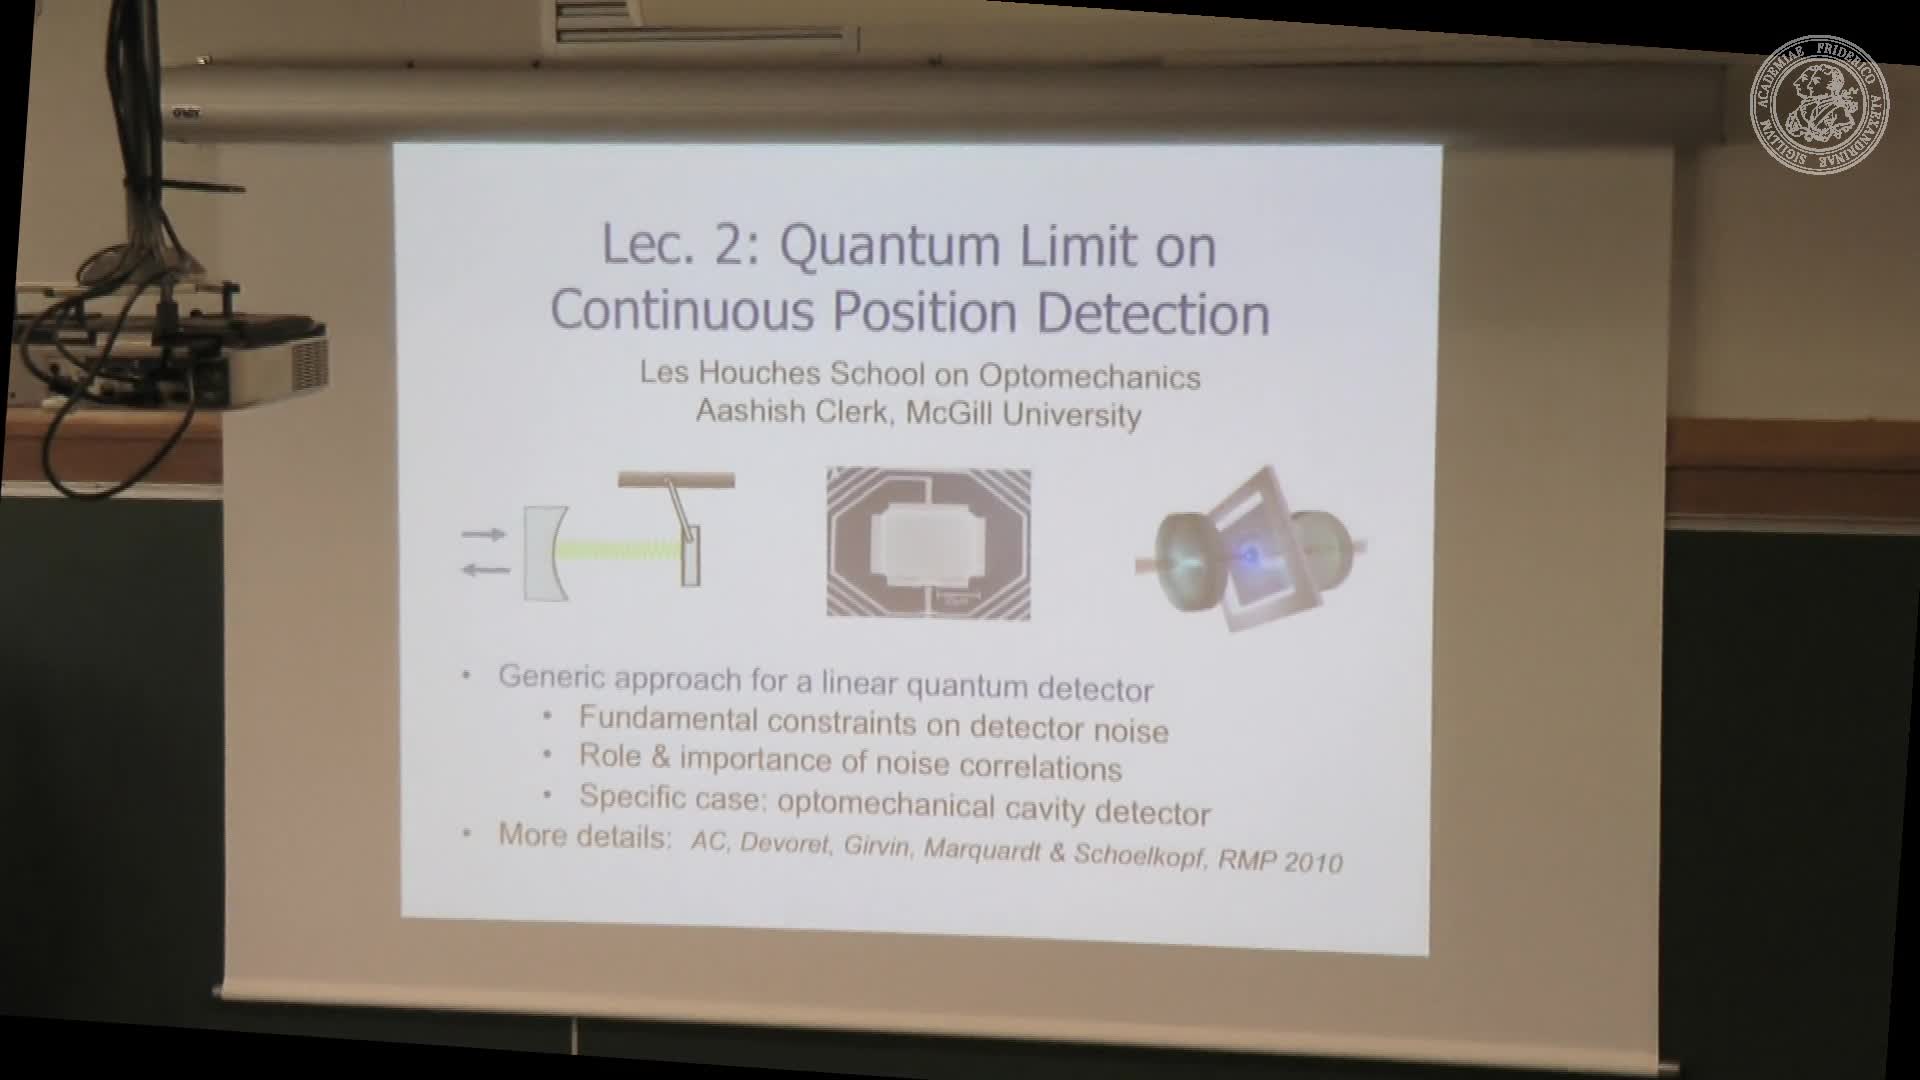 Optomechanics and quantum measurement - 2 preview image